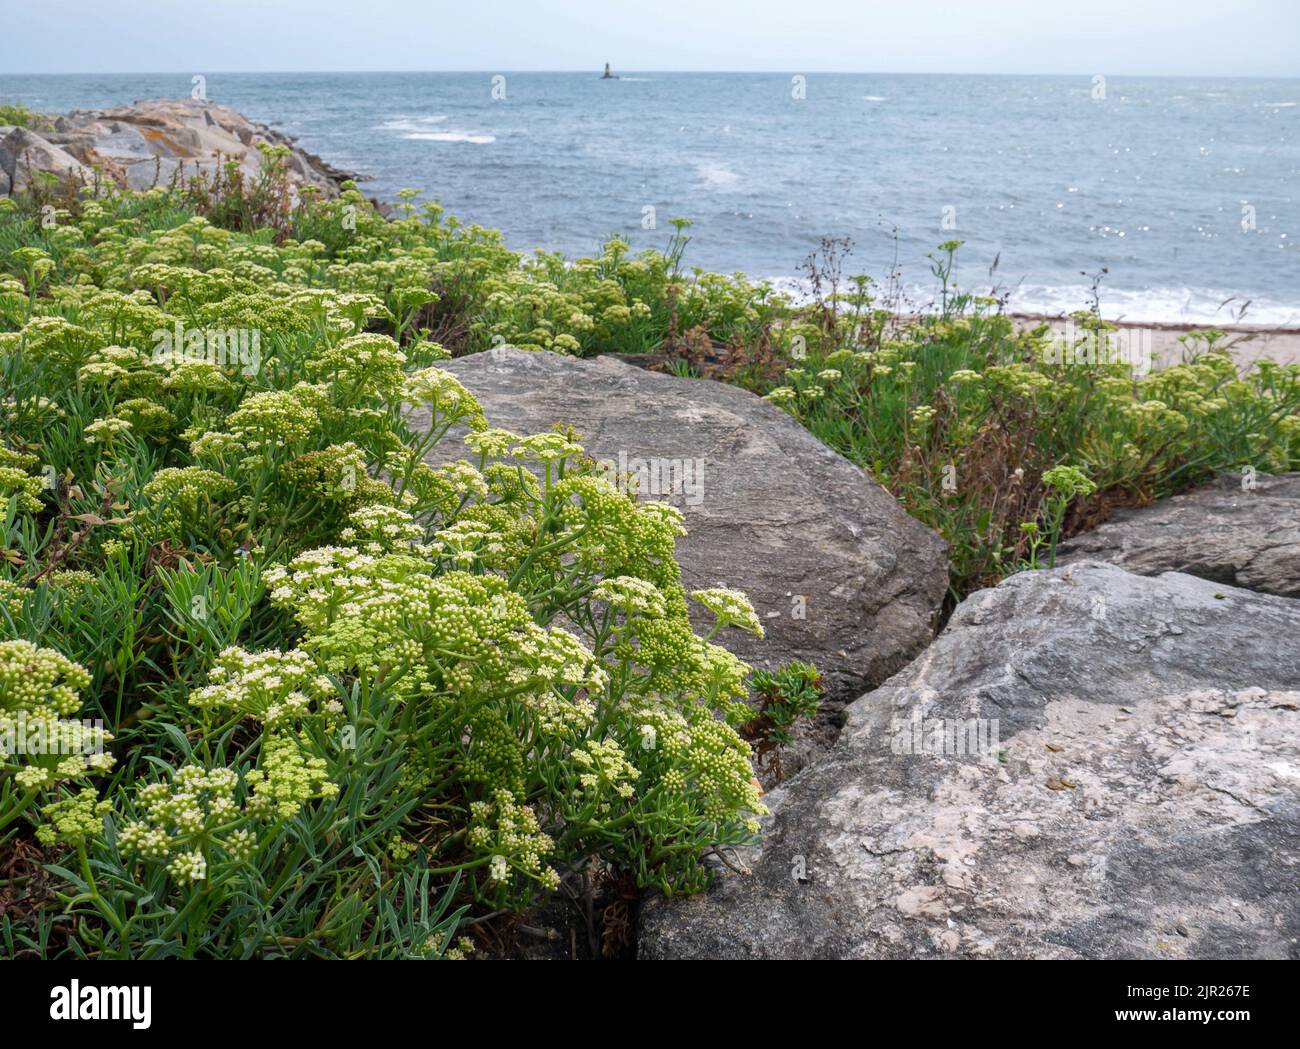 Crithmum maritimum, rock samphire or sea fennel or samphire flowering succulent plants on the blurred background at the coast near Burela lighthouse, Stock Photo